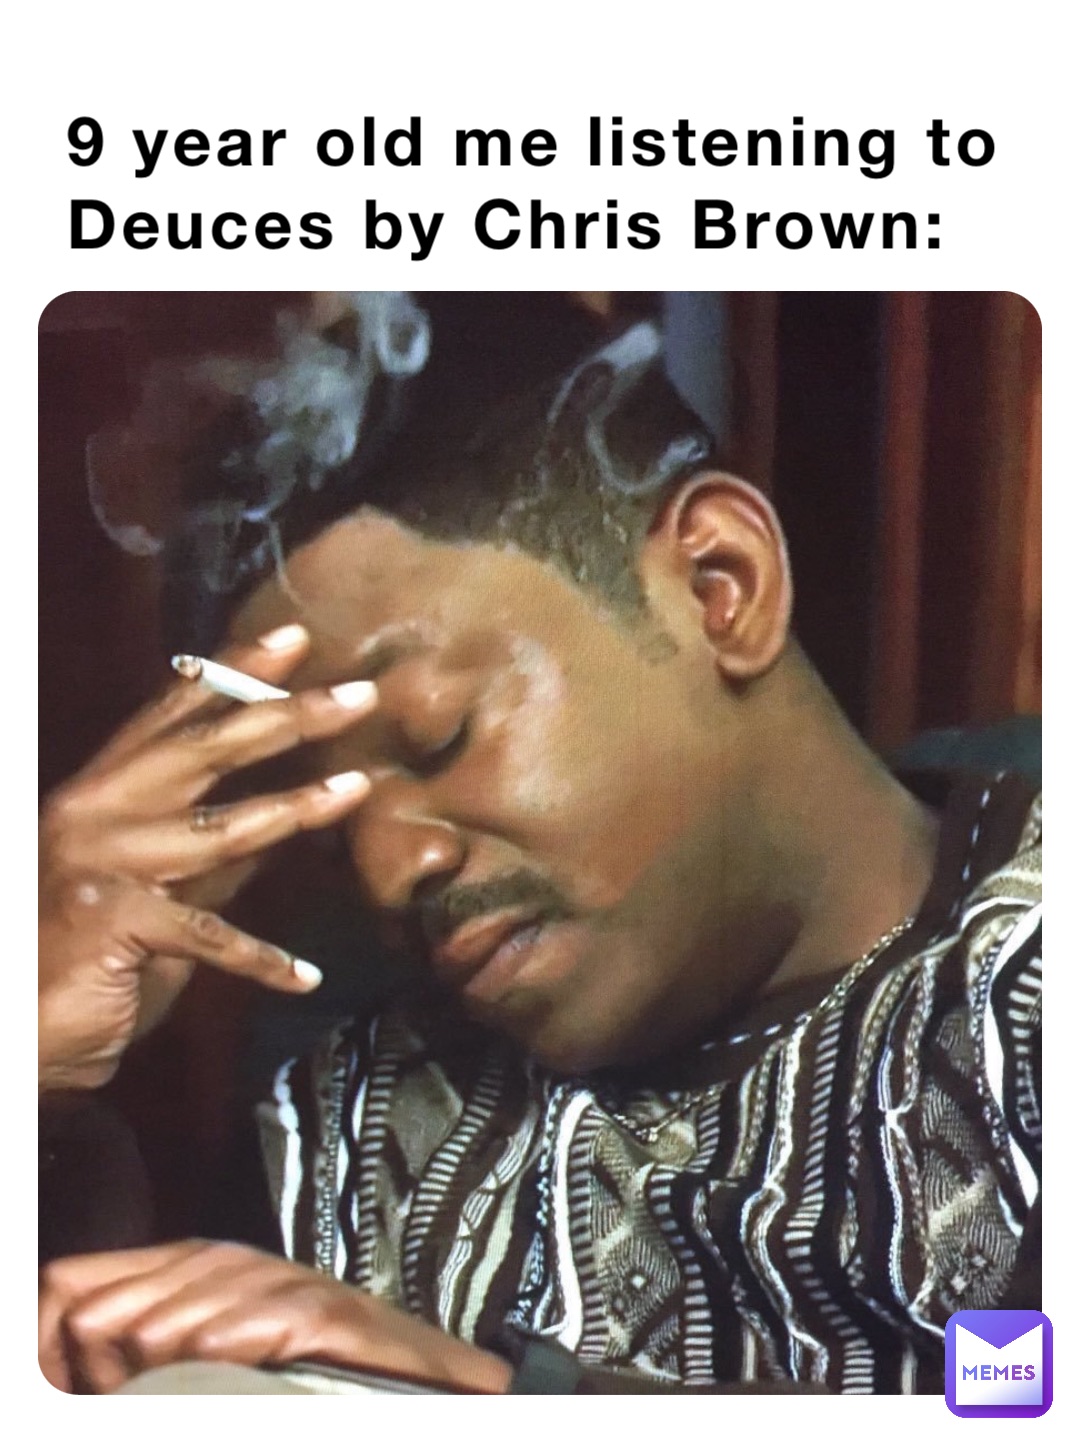 who wrote chris brown deuces